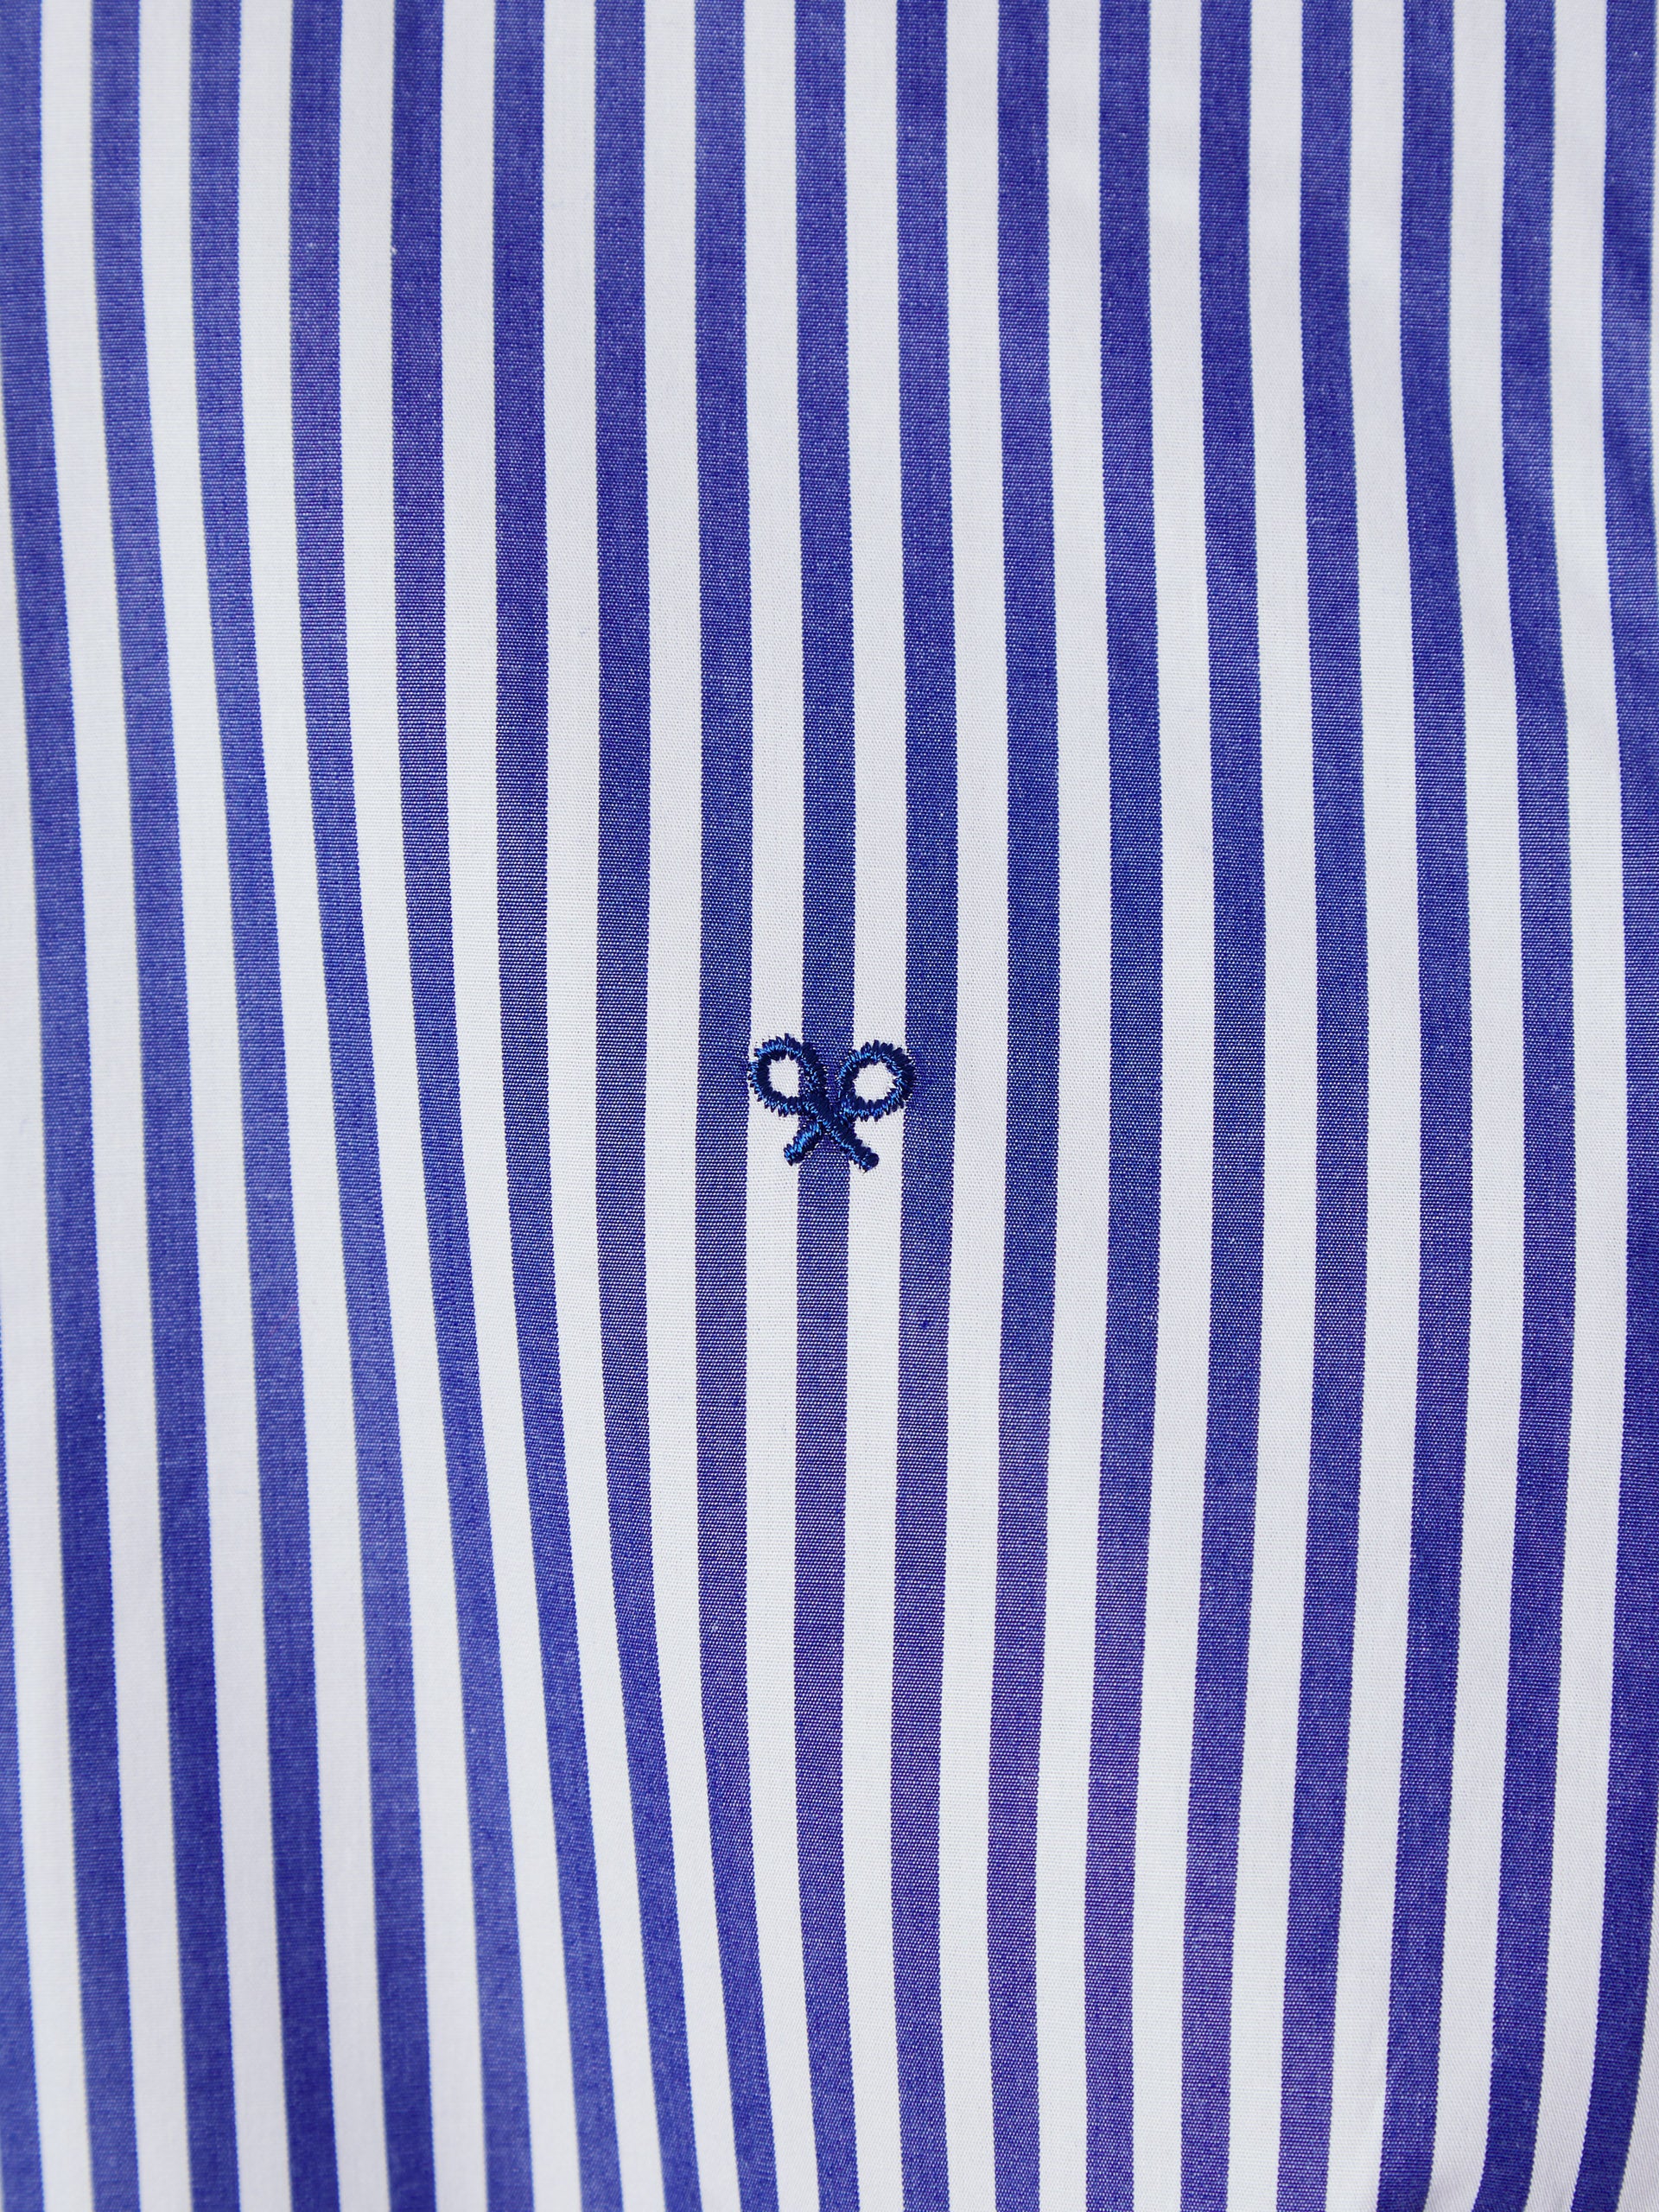 Camisa woman rayas azul y blanco